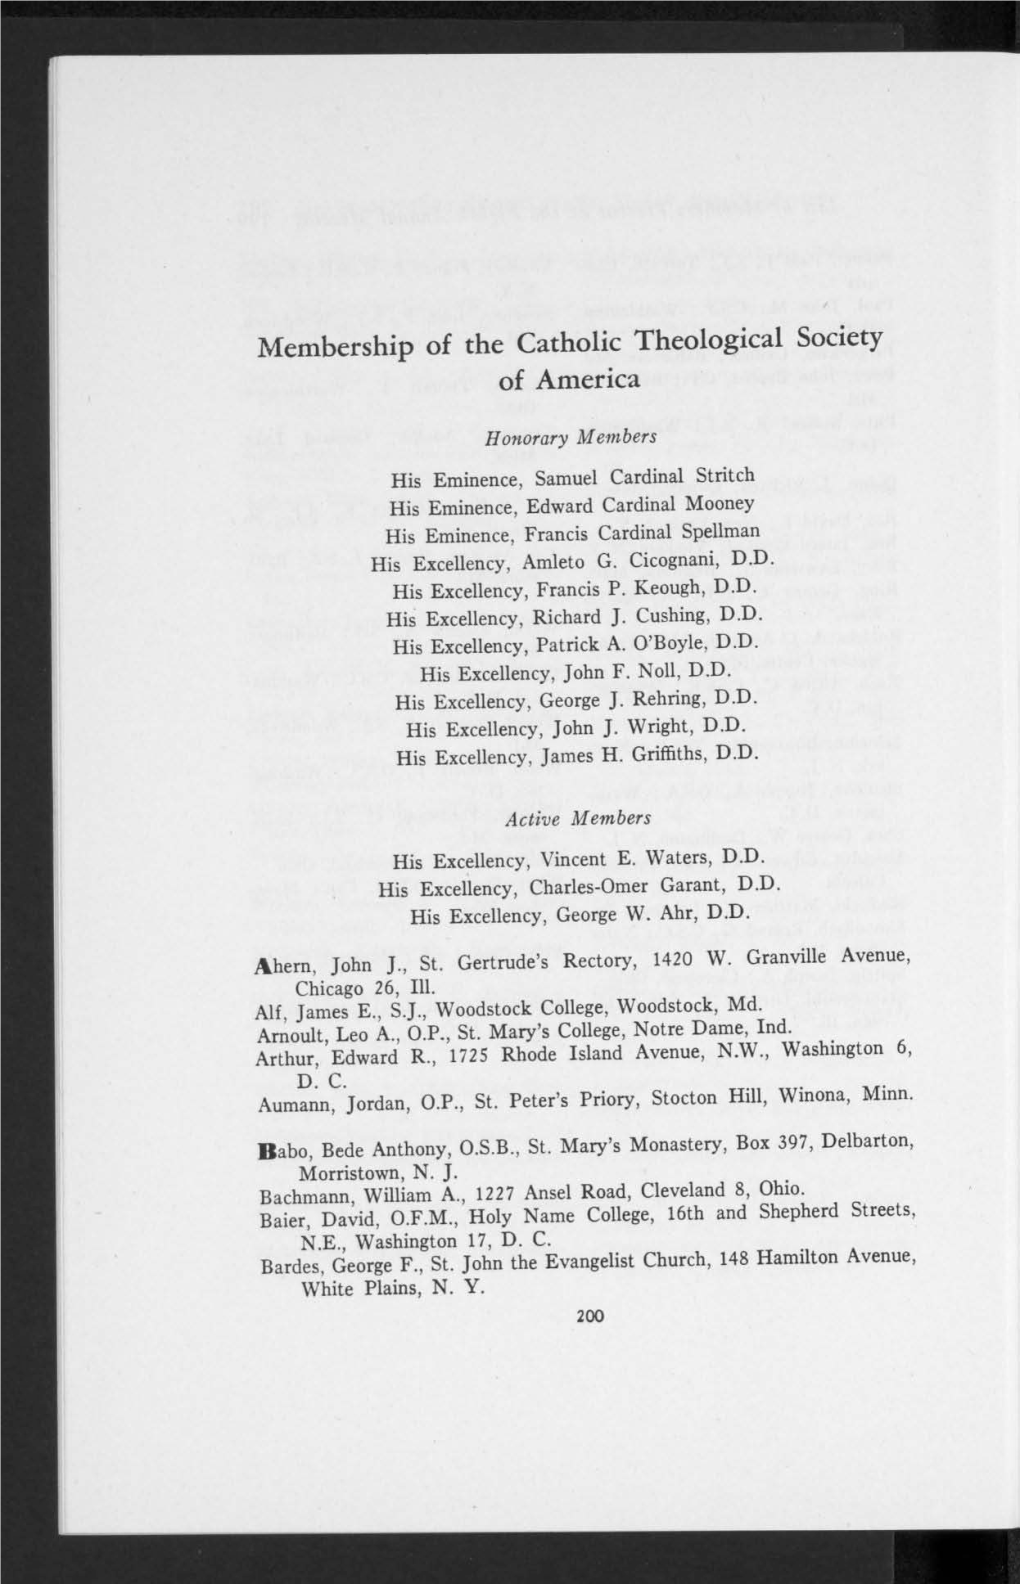 Membership of the Catholic Theological Society of America